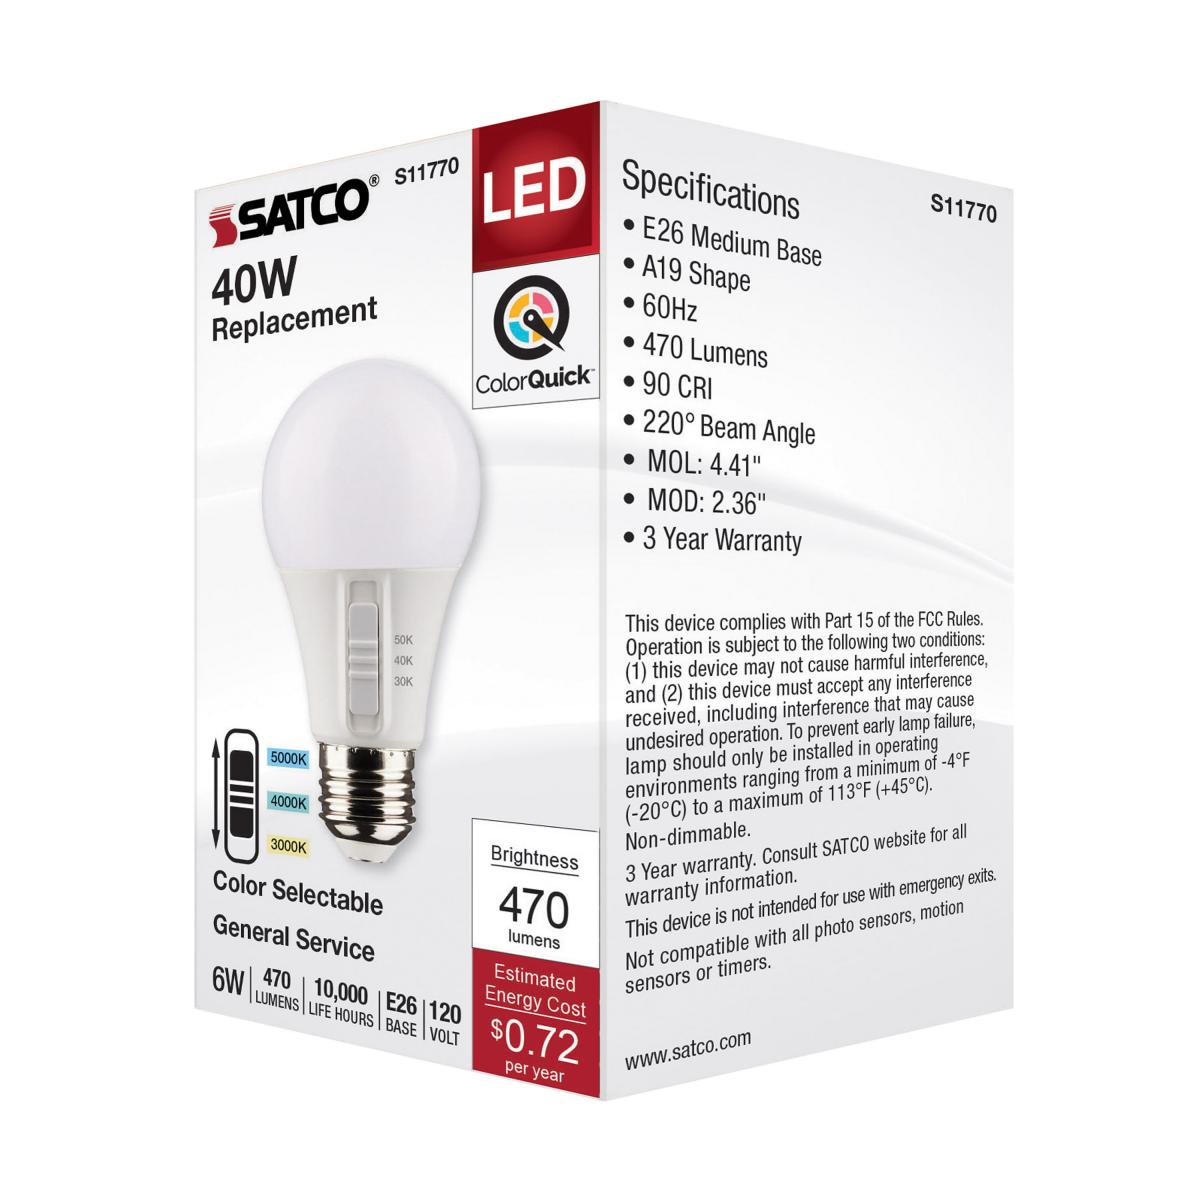 A19 LED Bulb, 40W Equivalent, 6 Watt, 470 Lumens, Selectable CCT 30K/40K/50K, E26 Medium Base, Frosted Finish